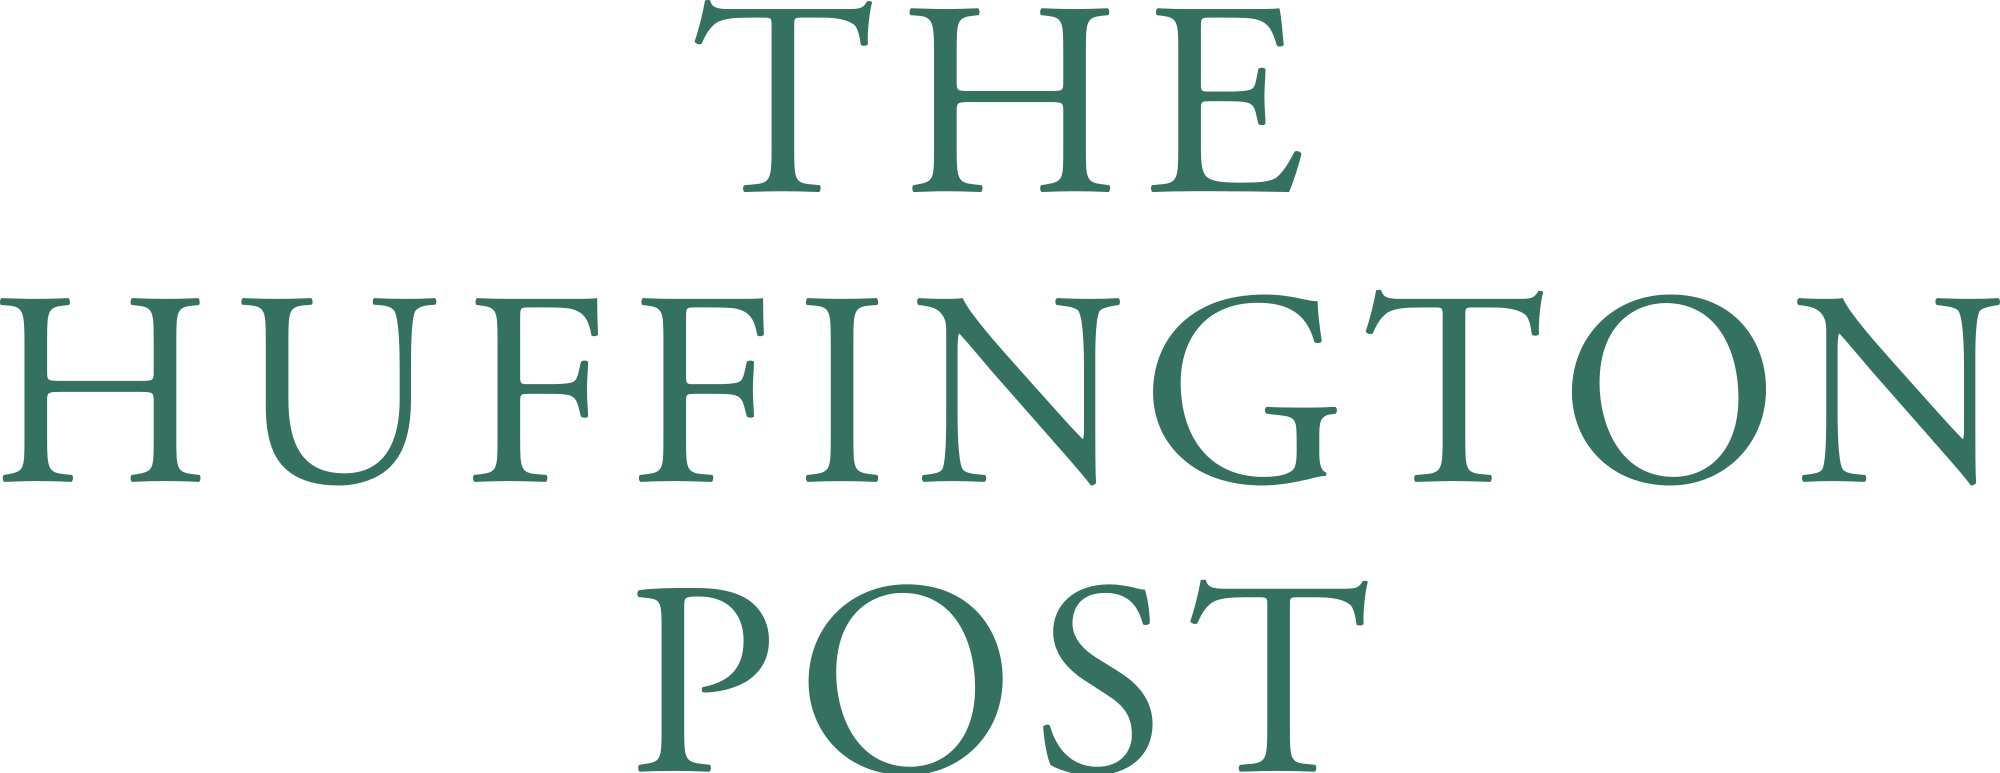 press-logo-huffington-post.pn